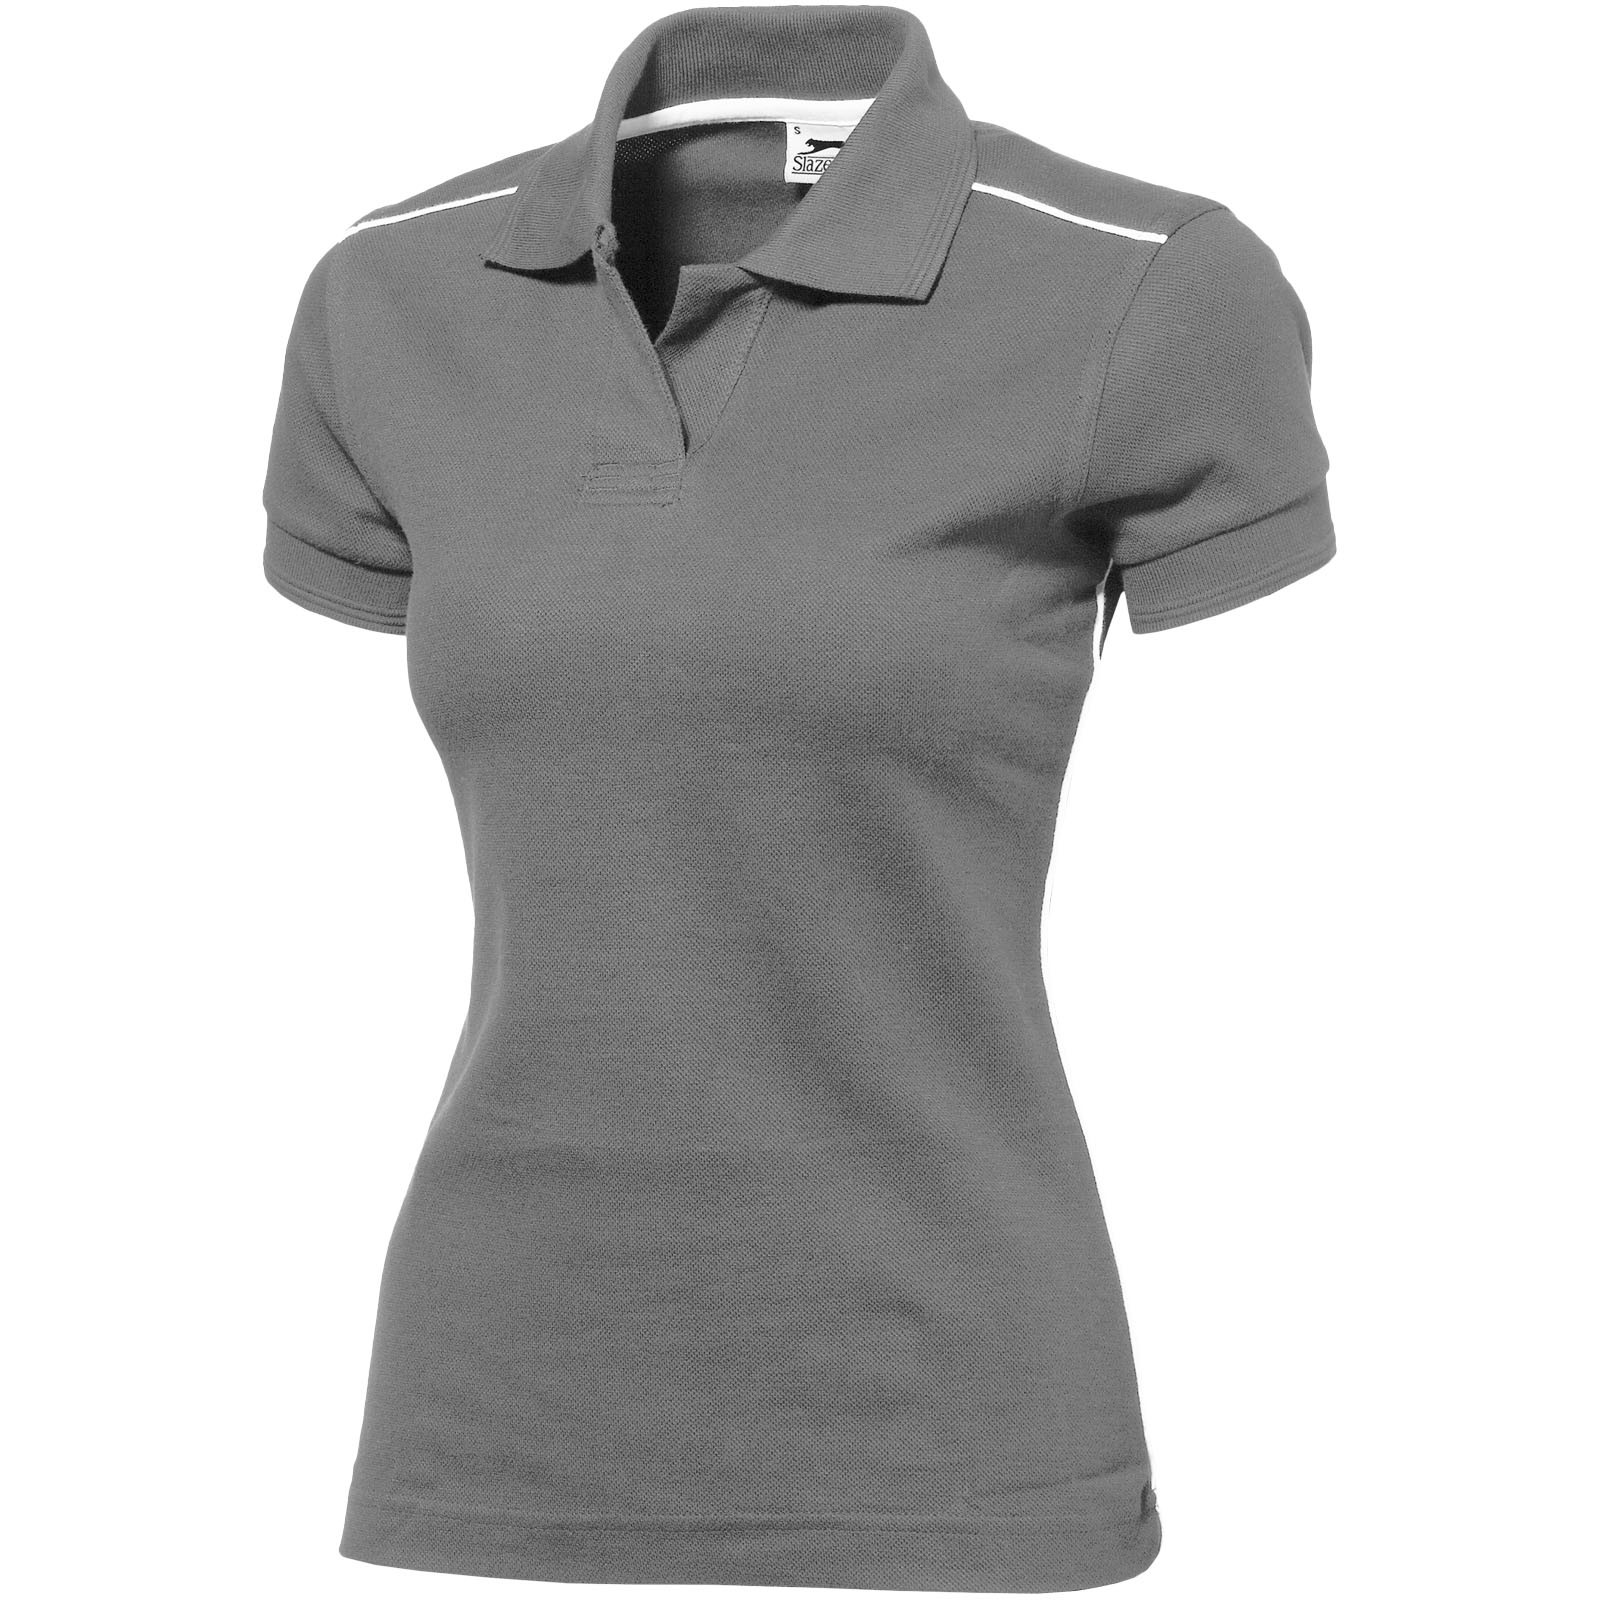 Backhand short sleeve ladies polo - Grey / XL